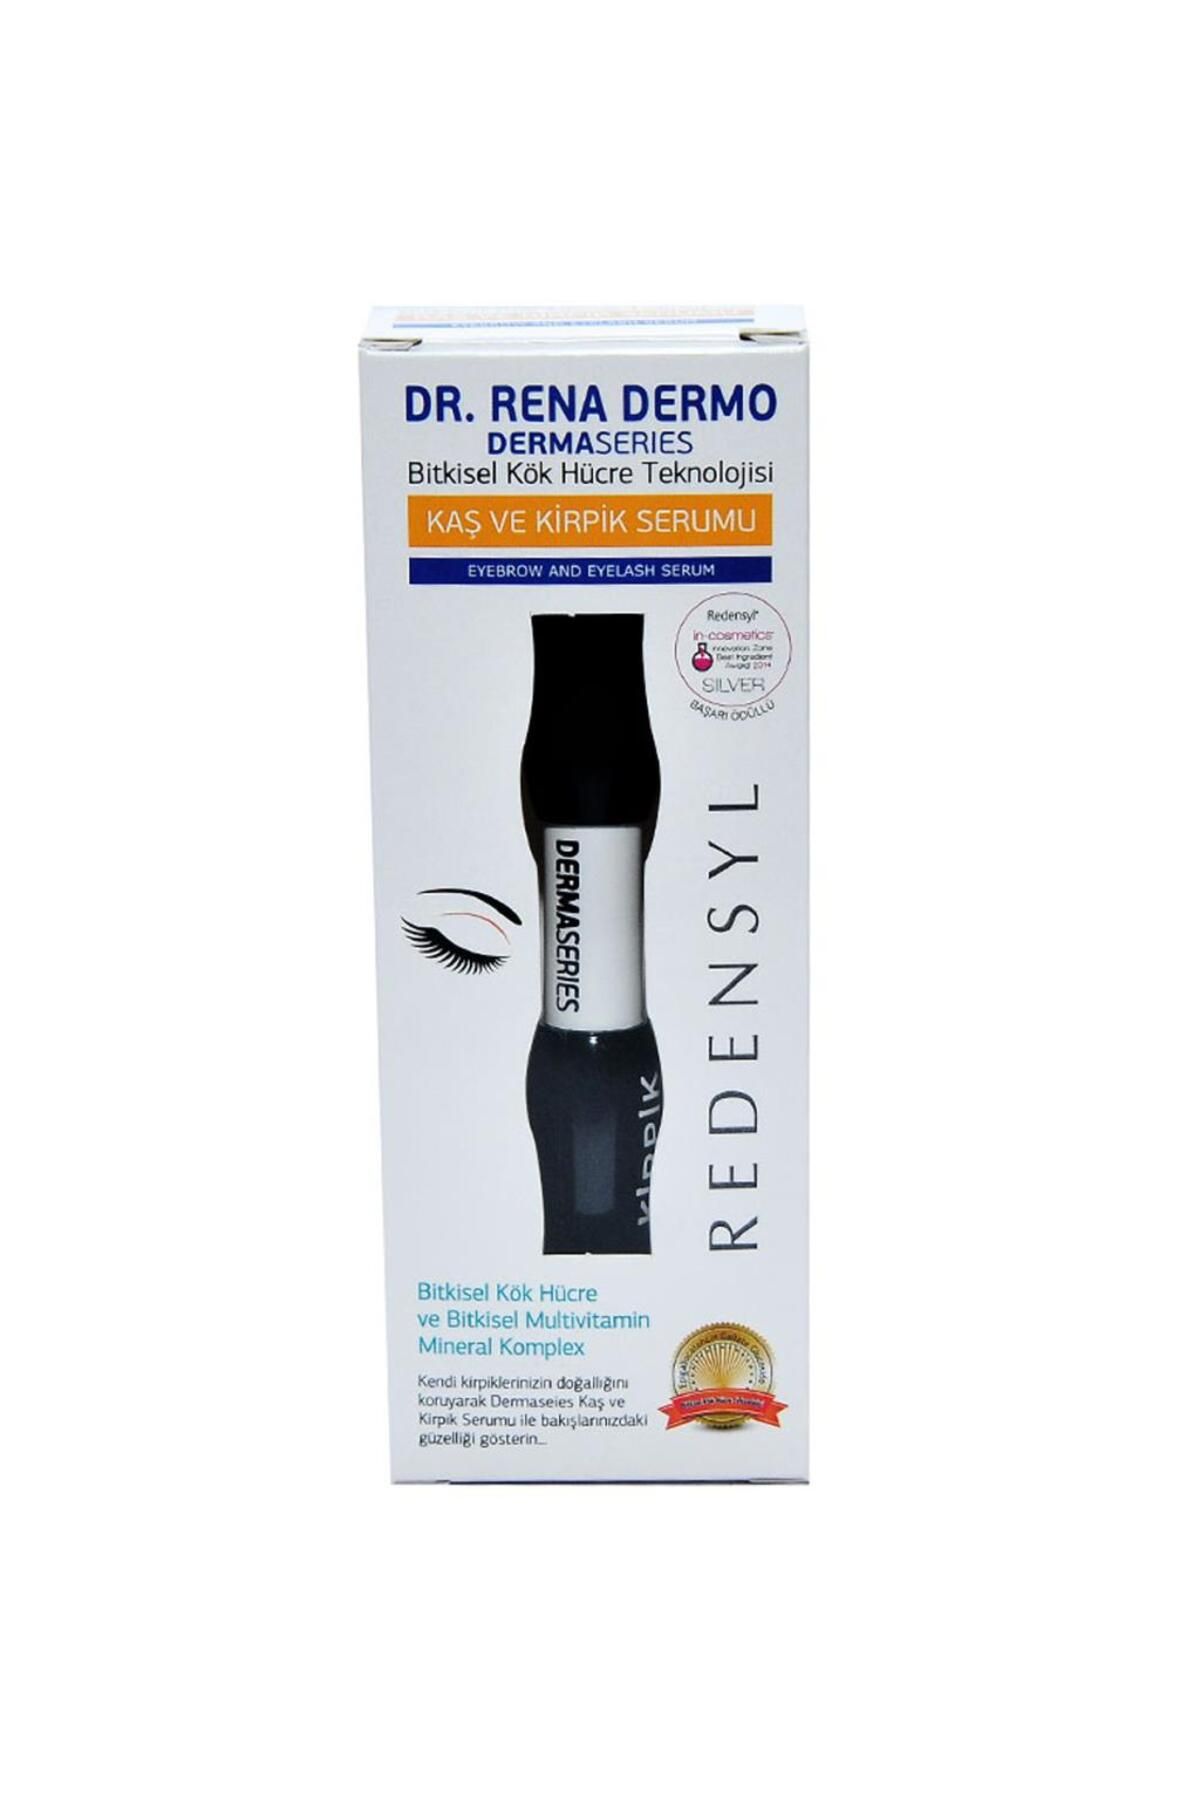 Dr. Rena Dermo Göz Çevresi Anti Aging Serum 8ml